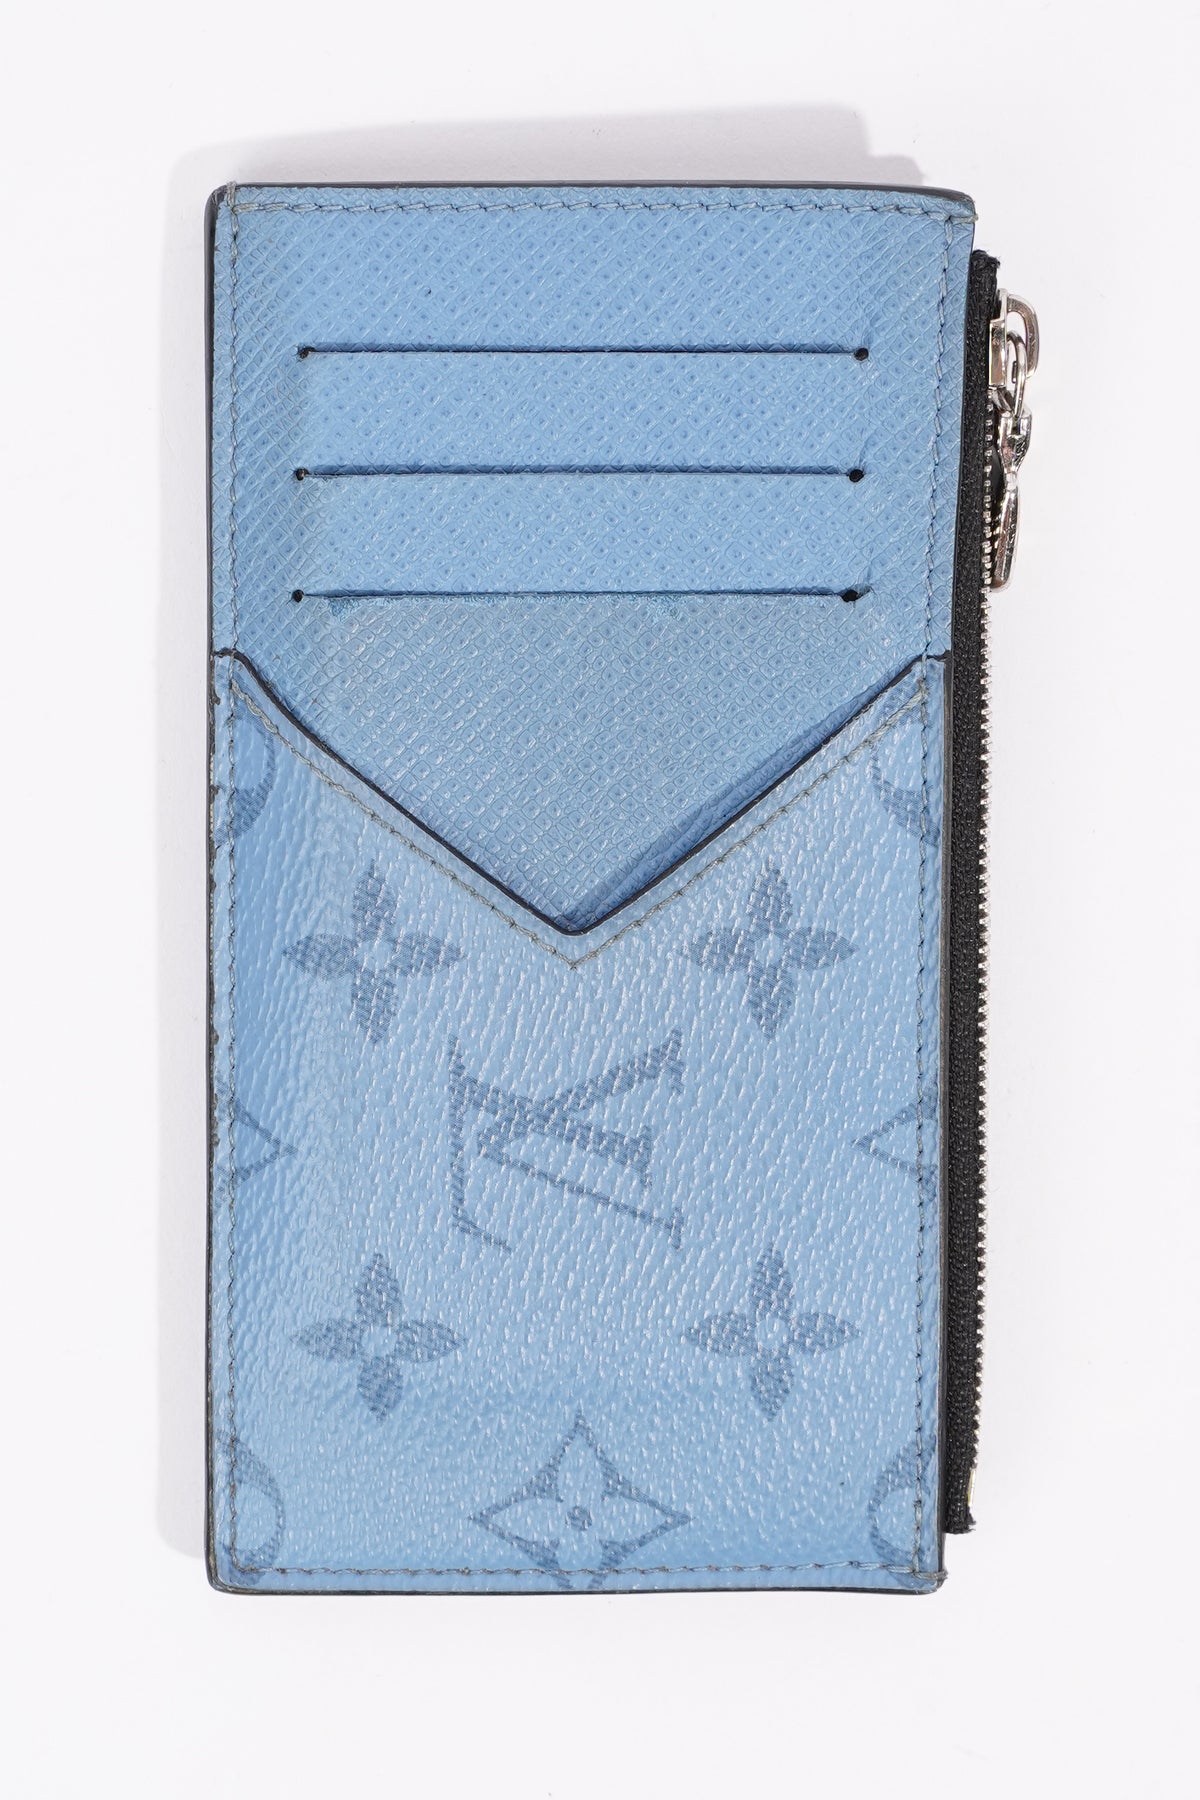 Louis Vuitton Coin Card Holder In Blue